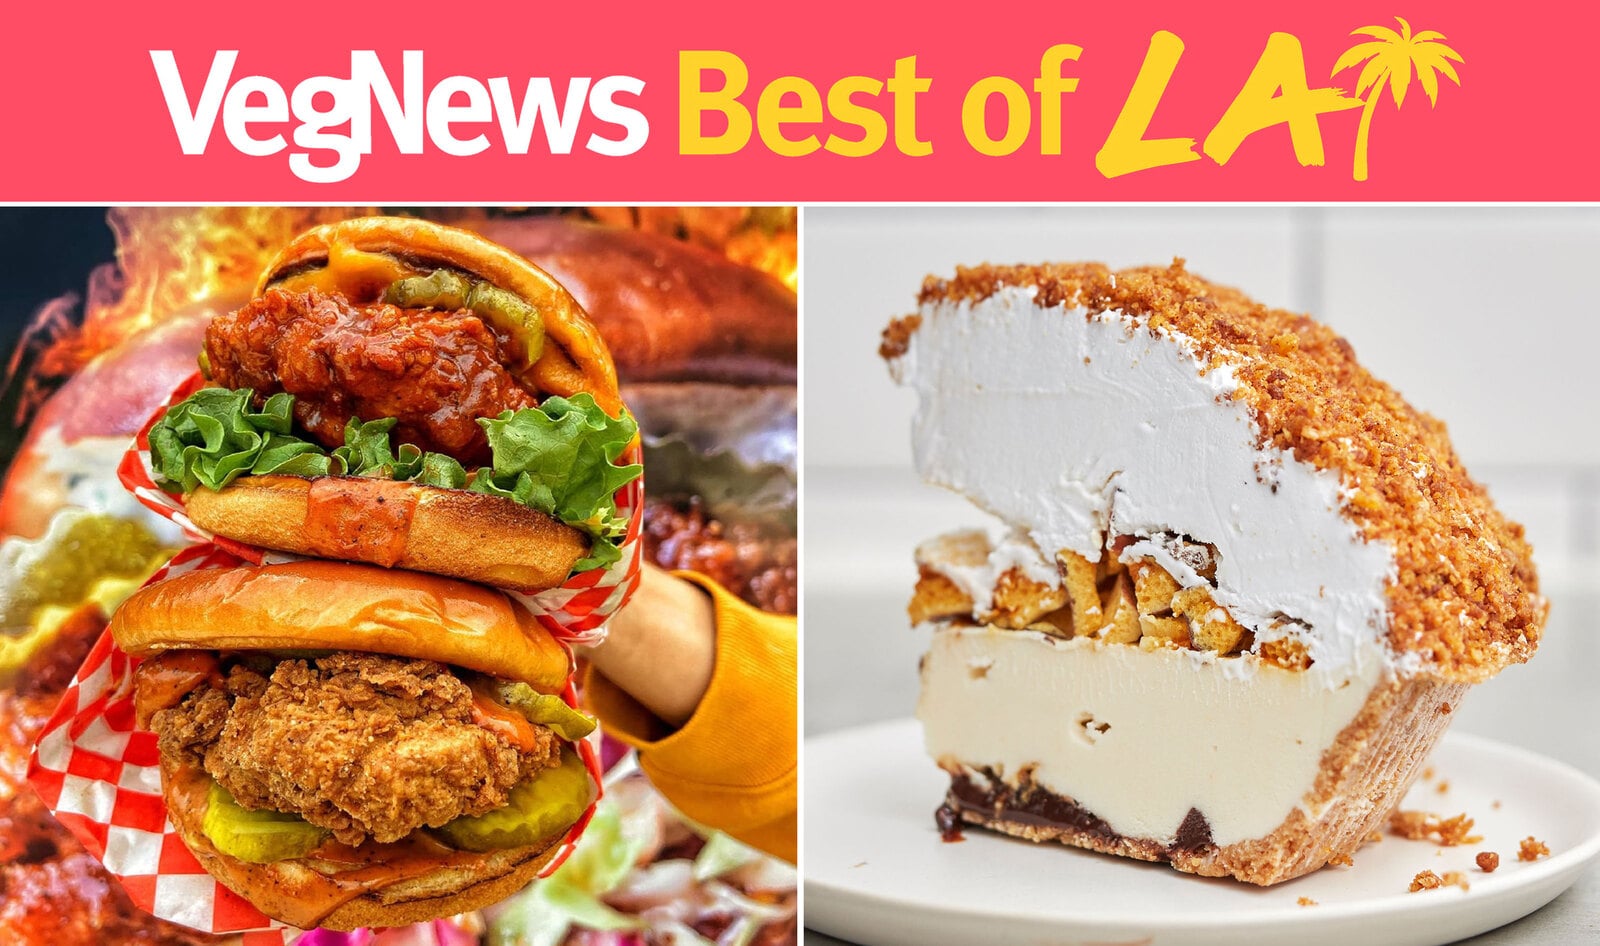 VegNews Best of LA Awards: The 34 Best Vegan Food Spots to Try<br>